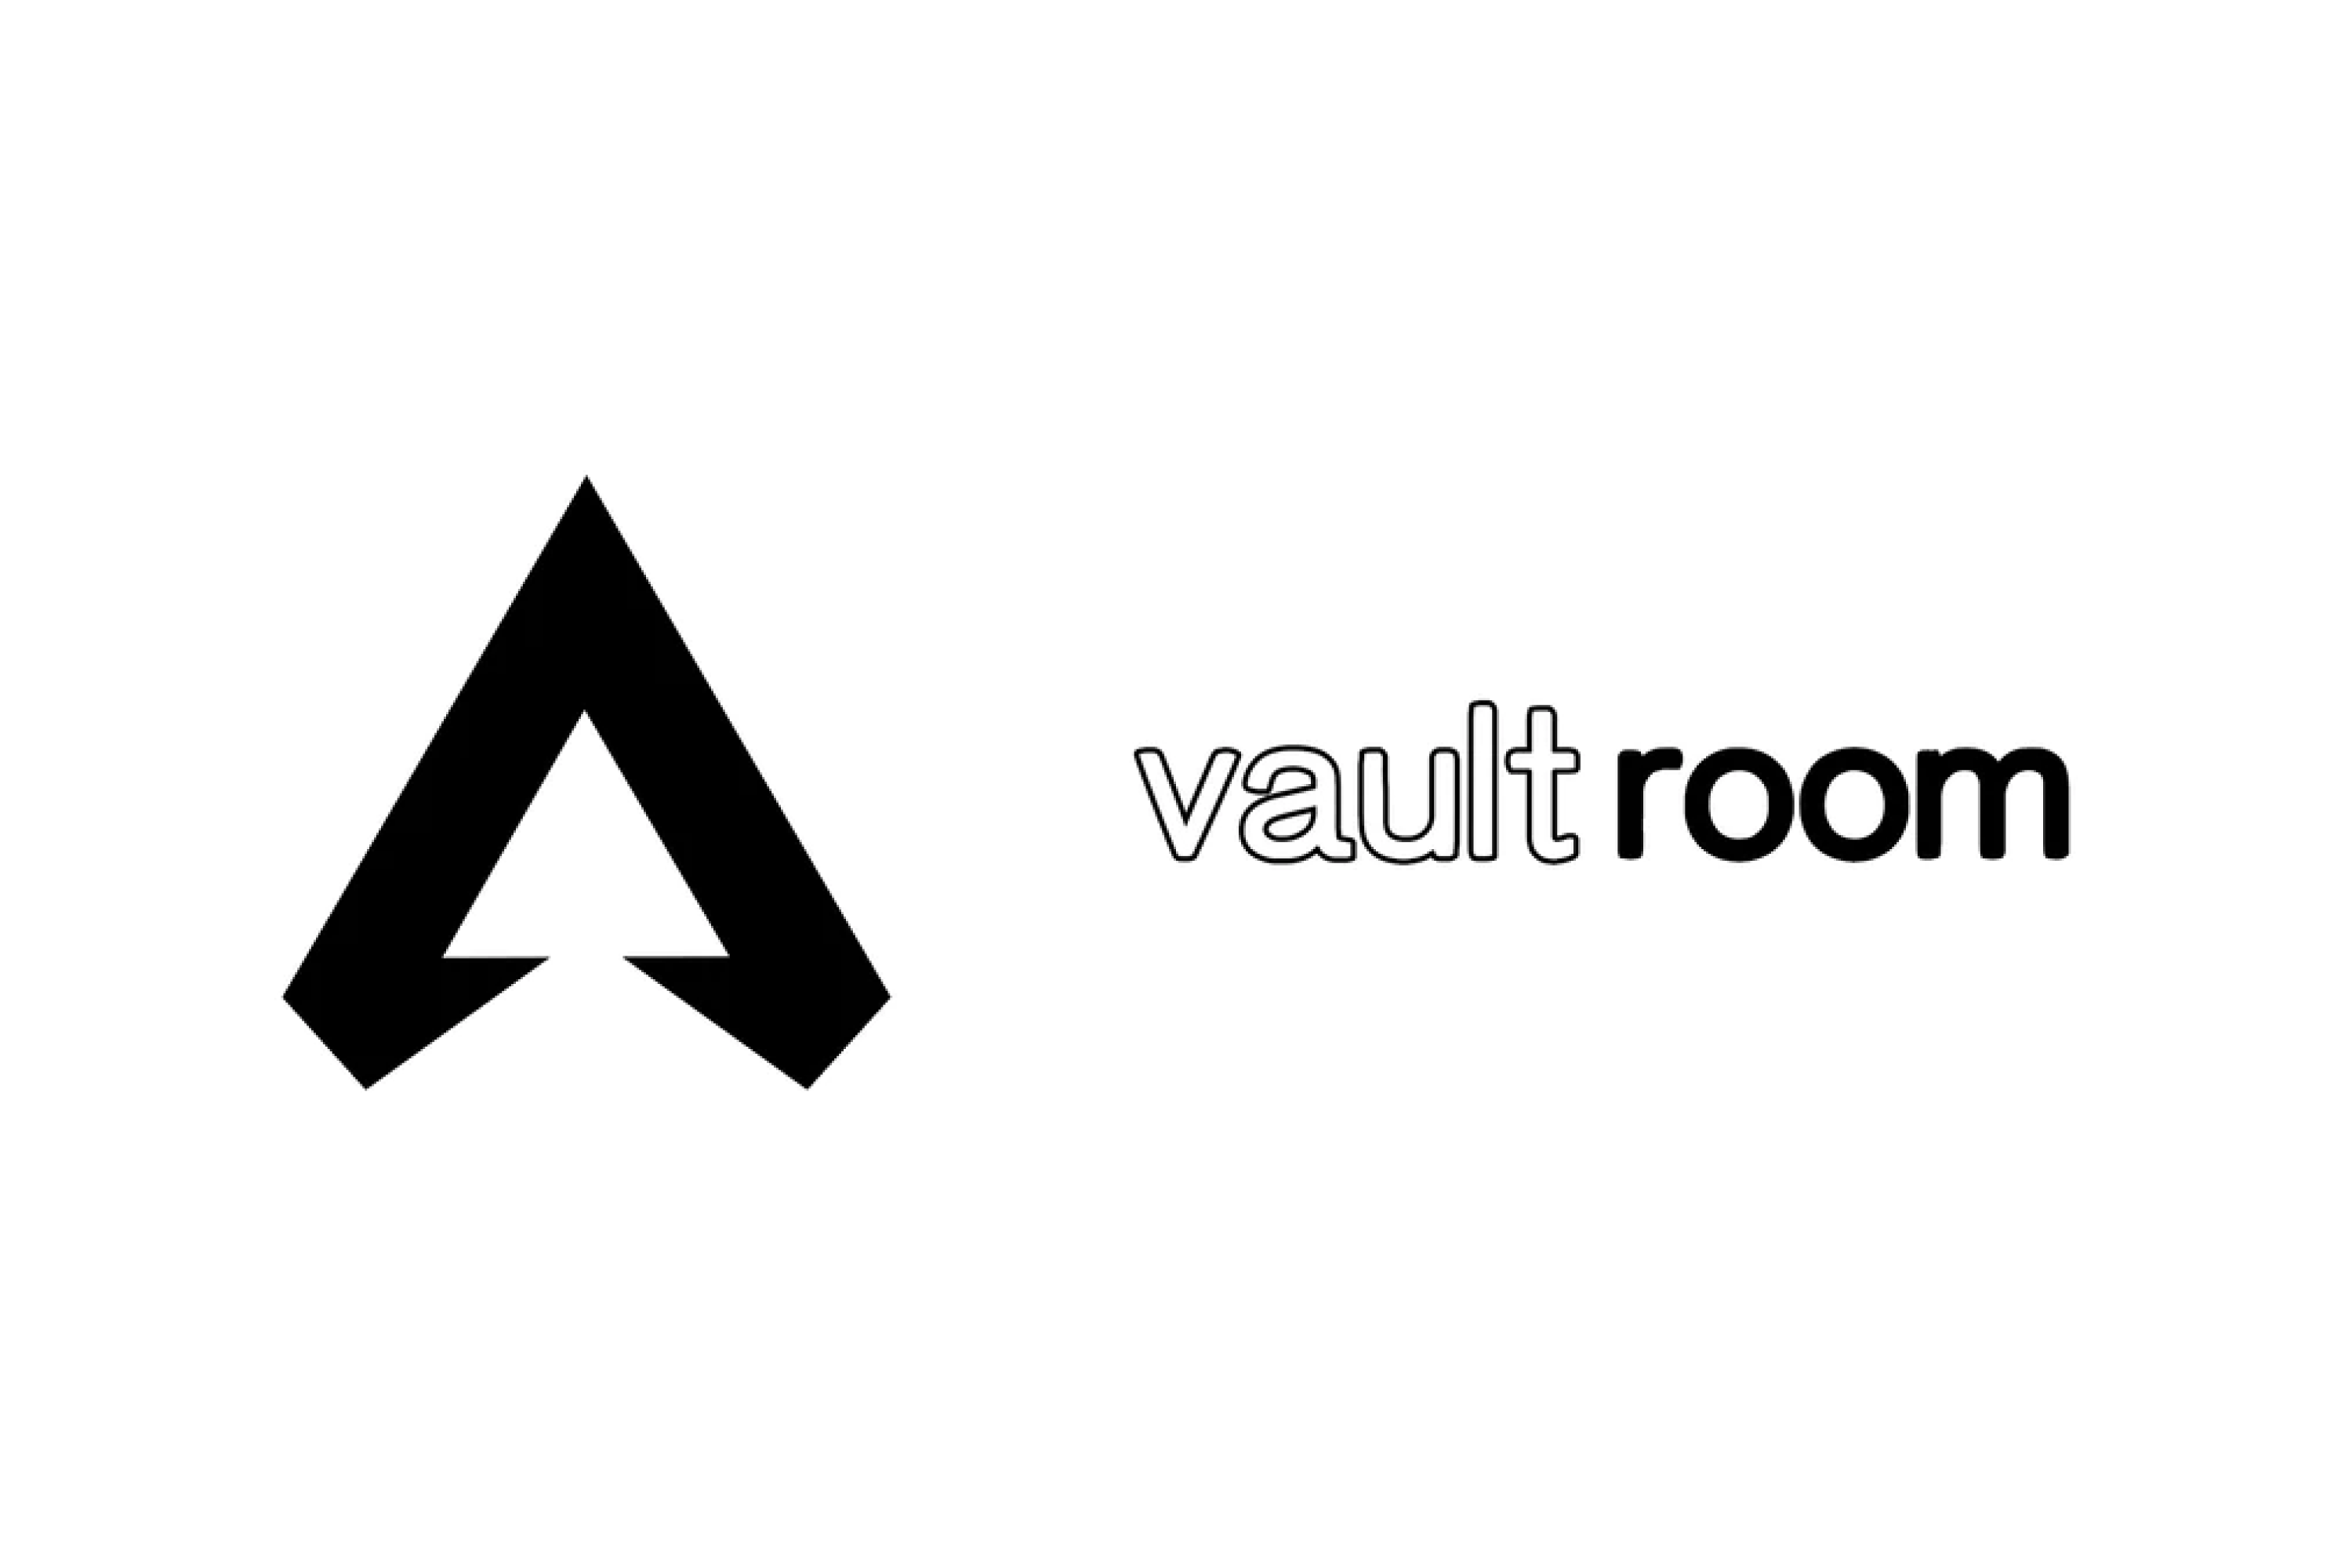 VaultroomとApex Legendsのコラボアパレルパーカー L - パーカー